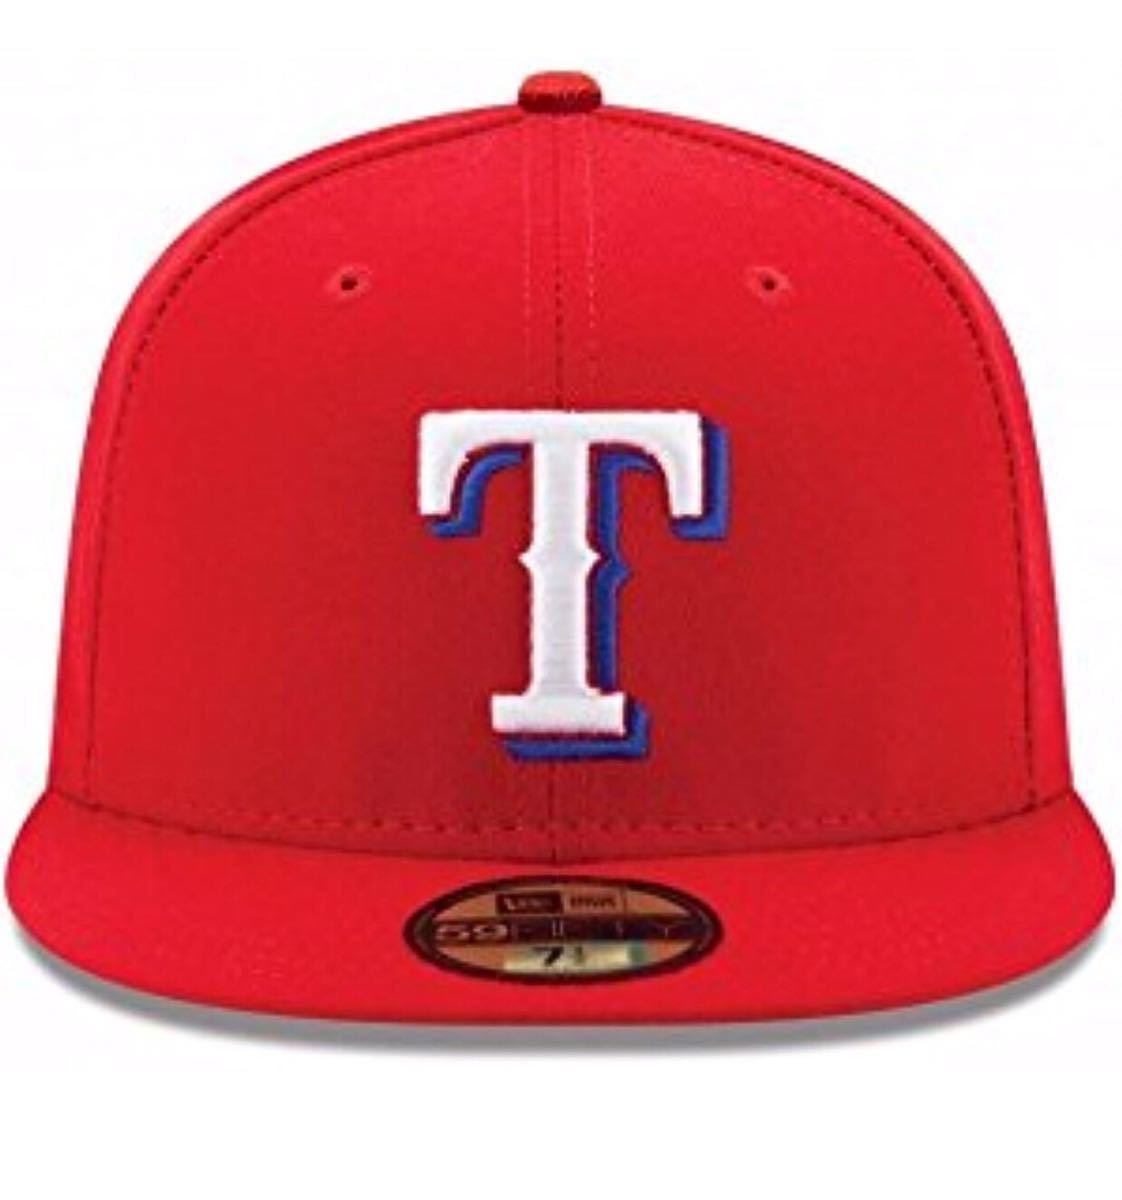 NEW ERA CAP ニューエラキャップ Texas Rangers テキサスレンジャーズ_画像1